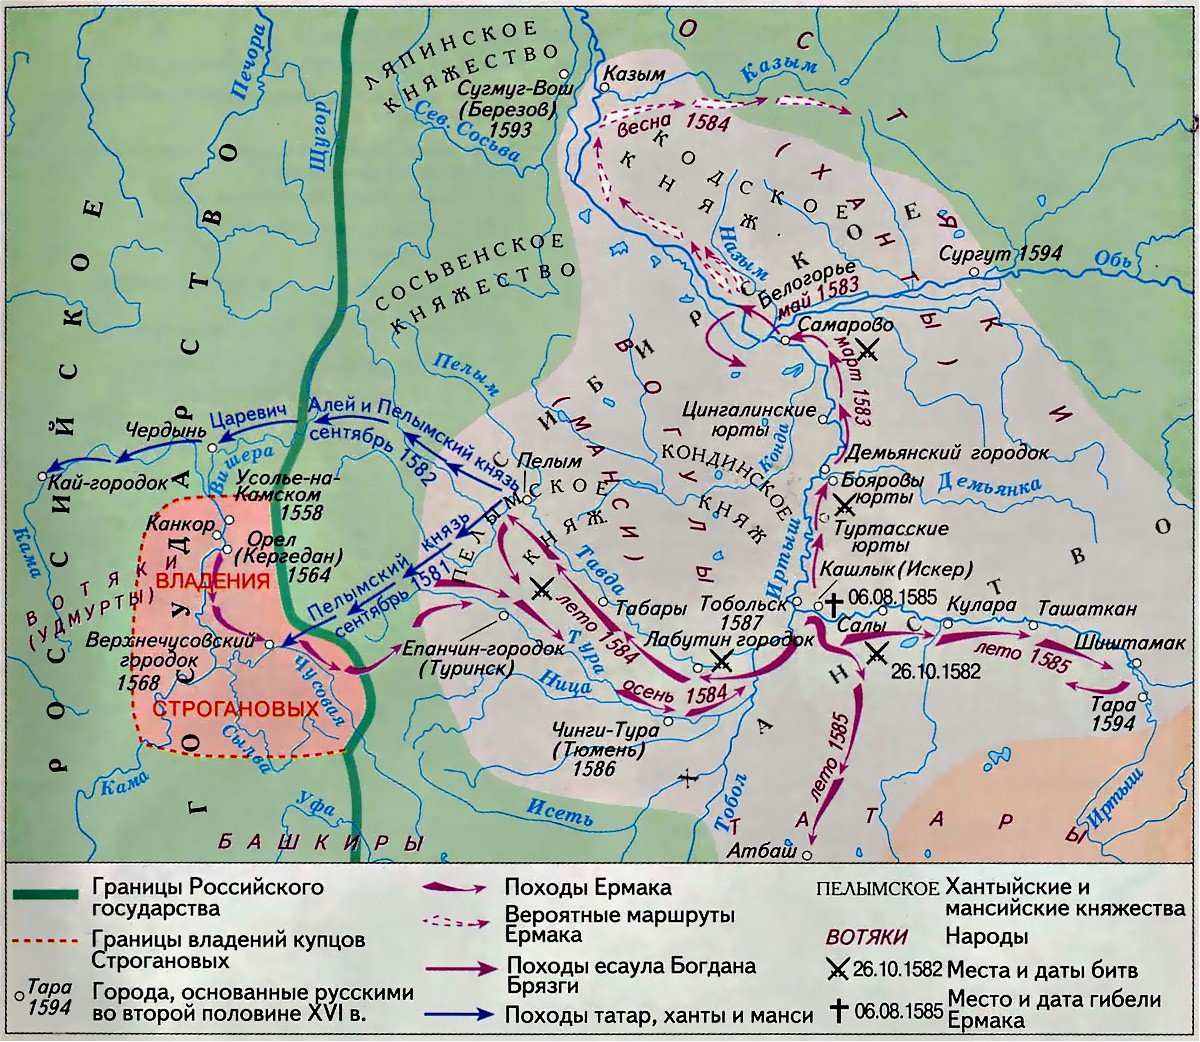 Поход ермака карта контурная. Карта похода Ермака в Сибирь в 1582-1585. Поход Ермака 1582.